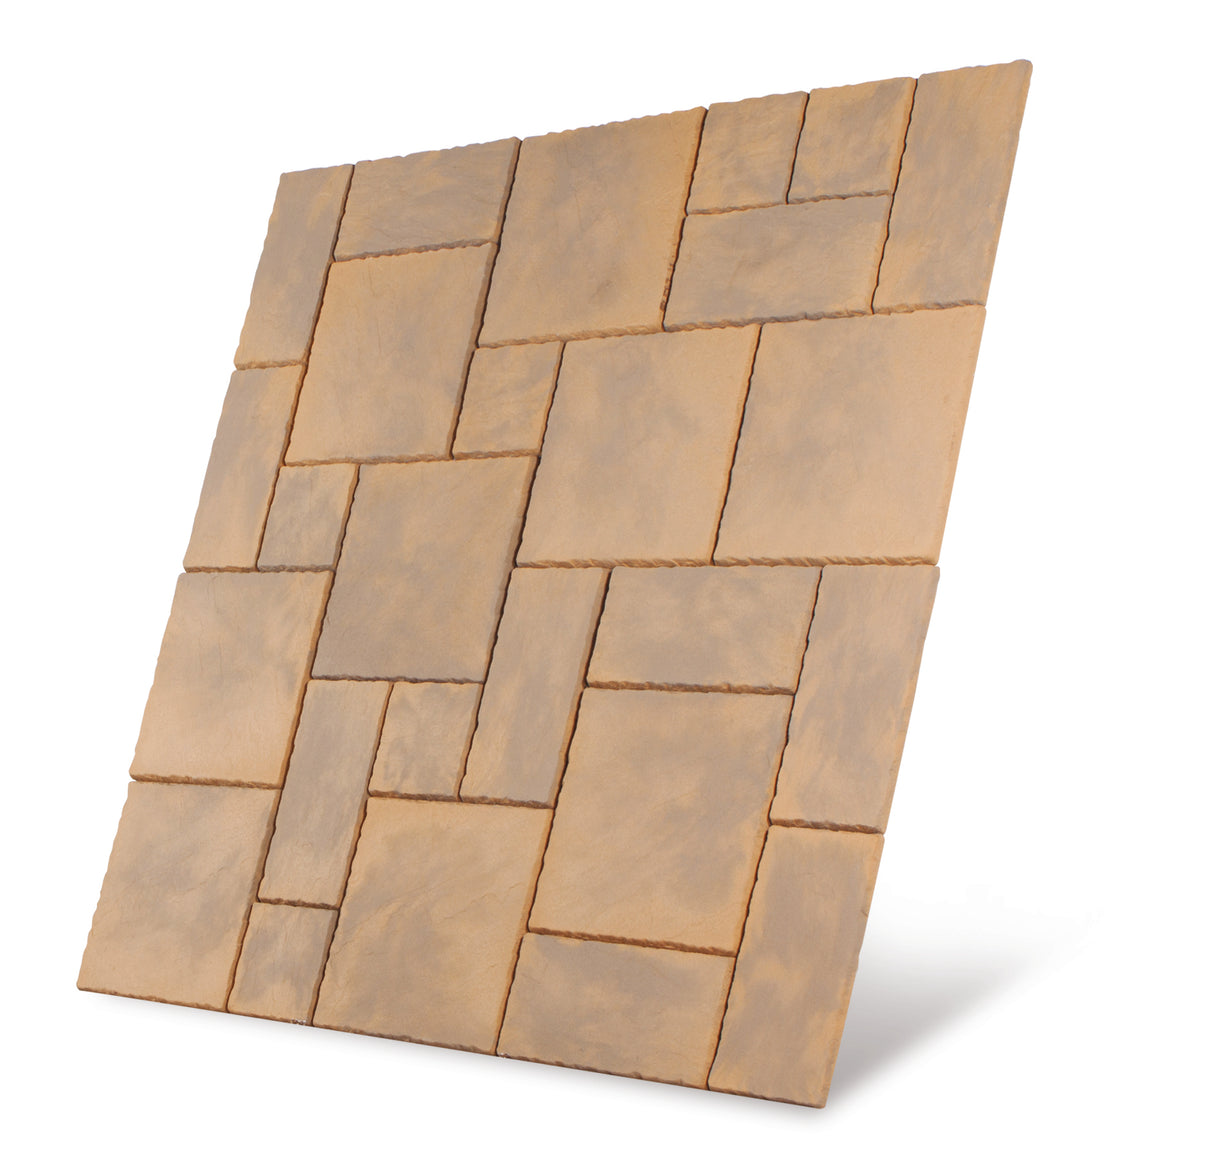 Bowland Stone Chalice Patio Paving Kits - Honey Brown - 5.76m²